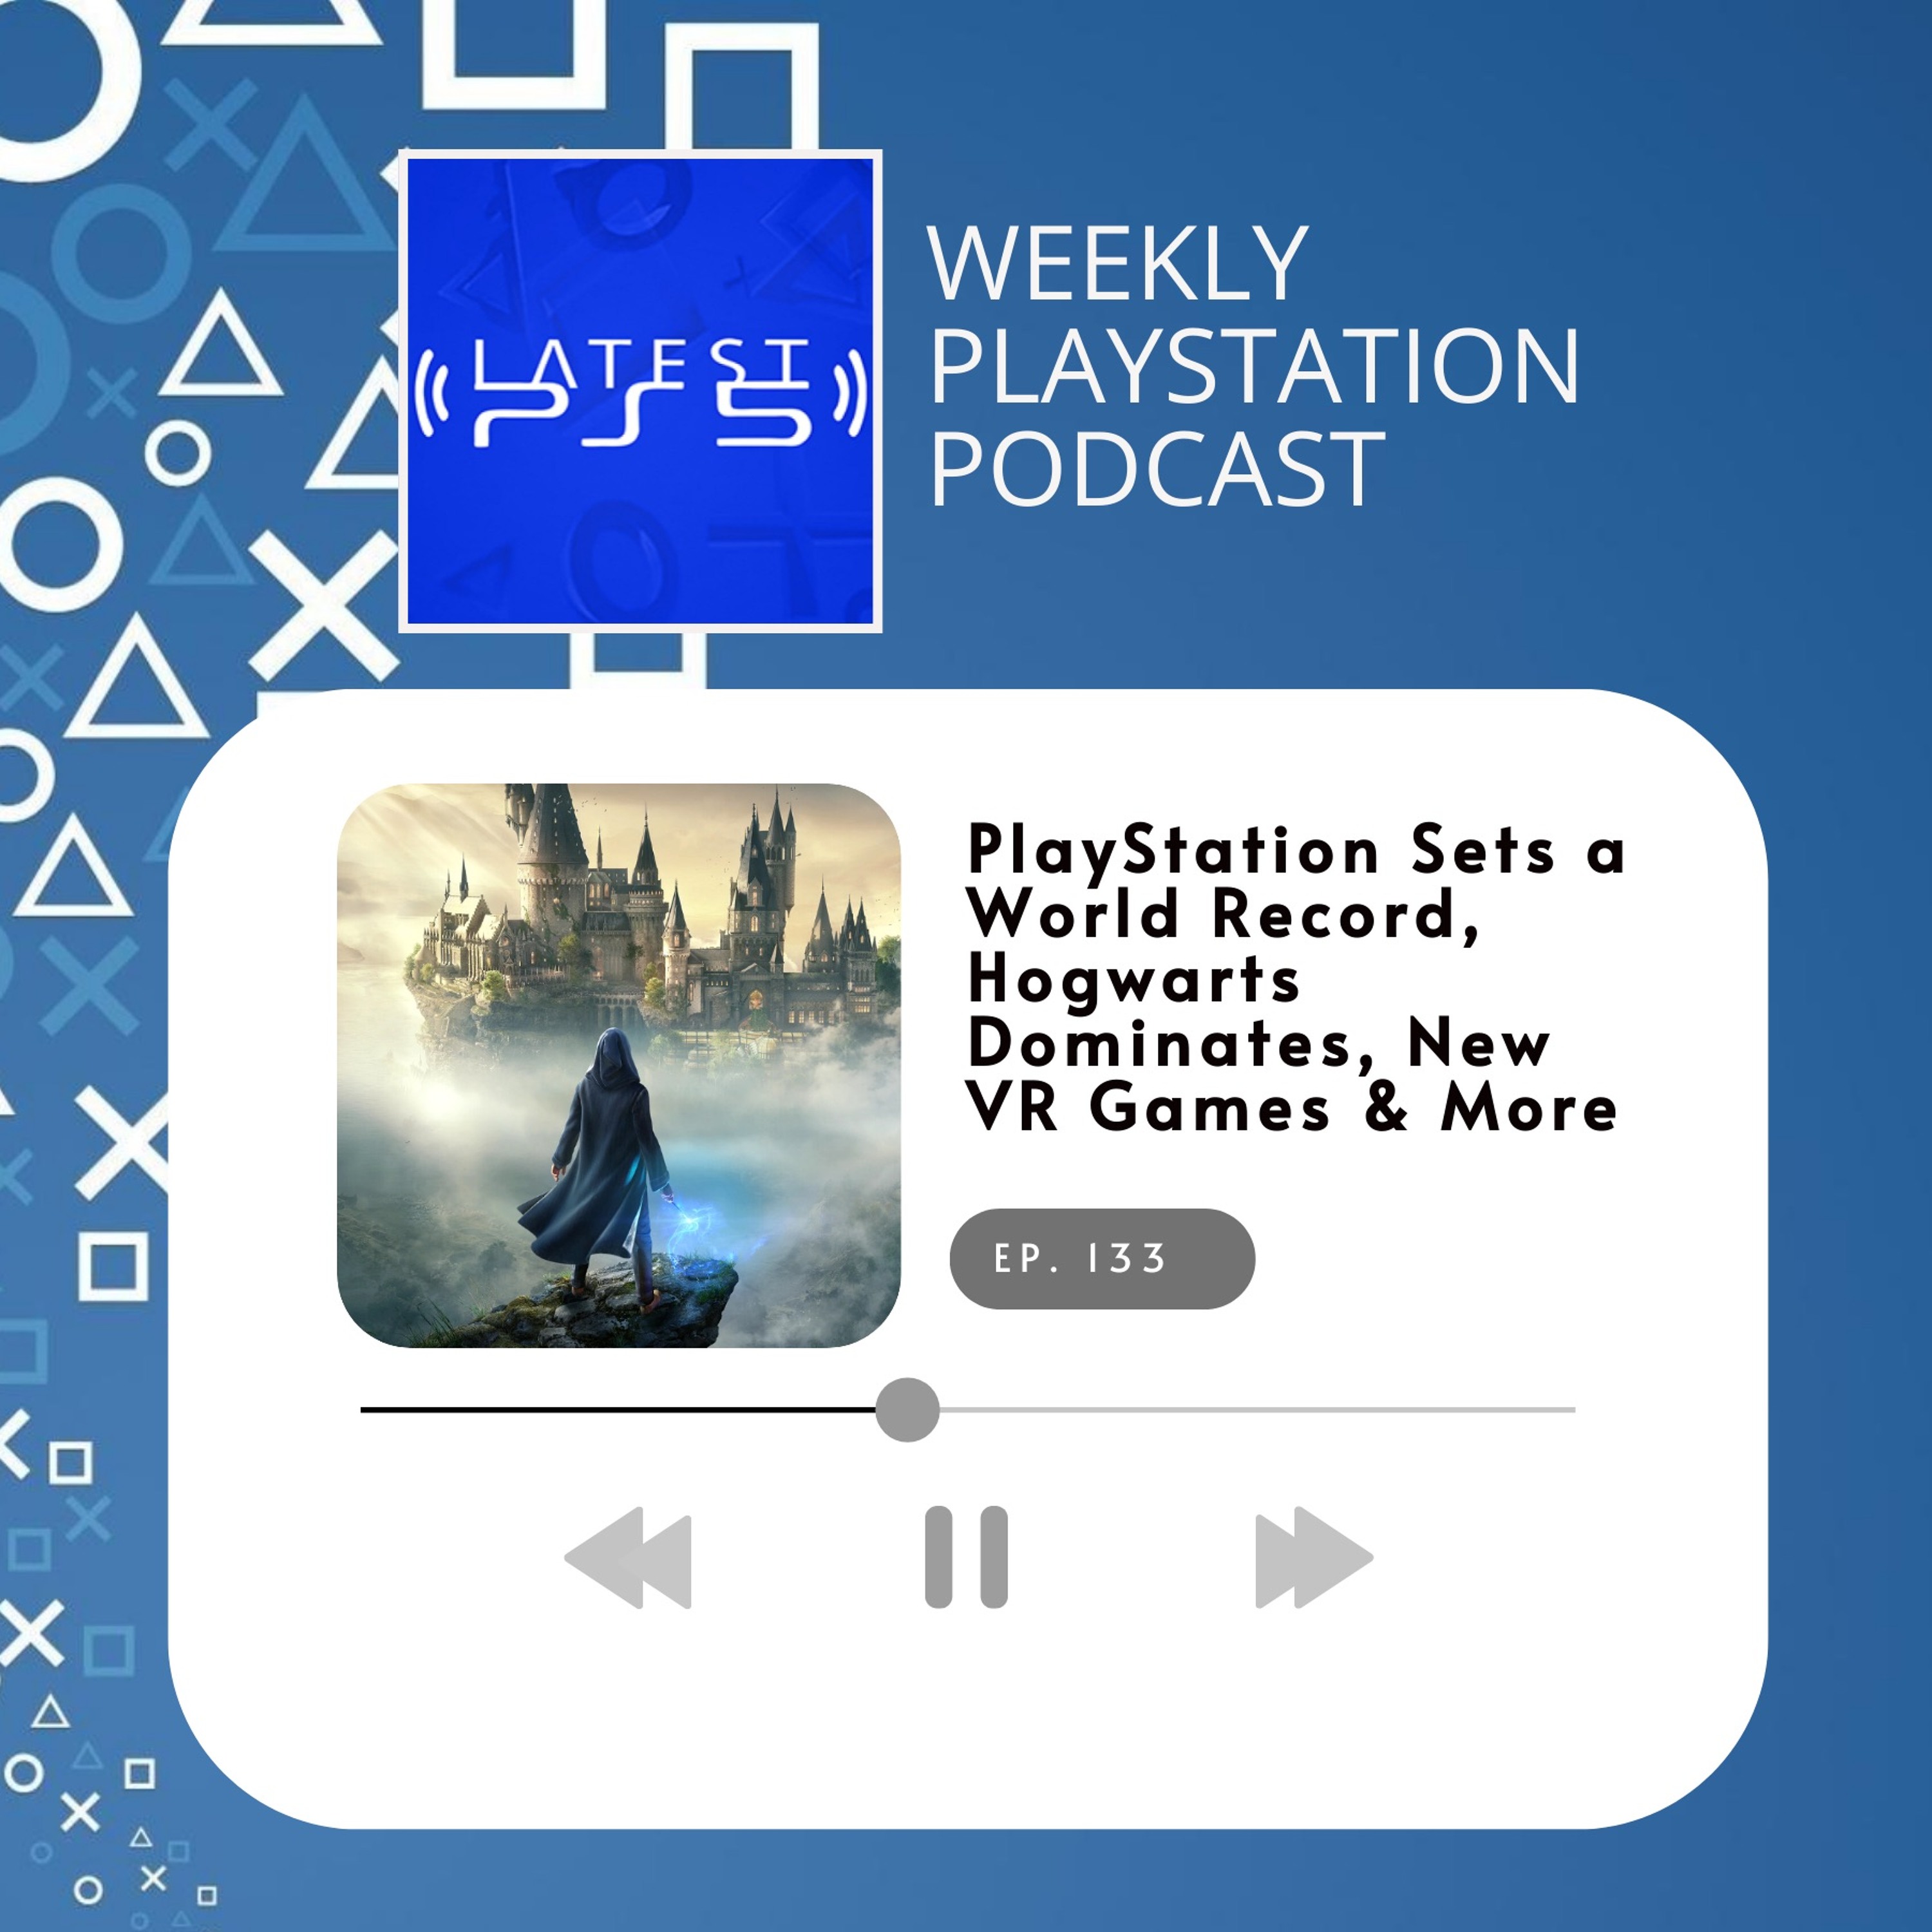 PlayStation Sets a World Record, Hogwarts Dominates, New VR Games & More